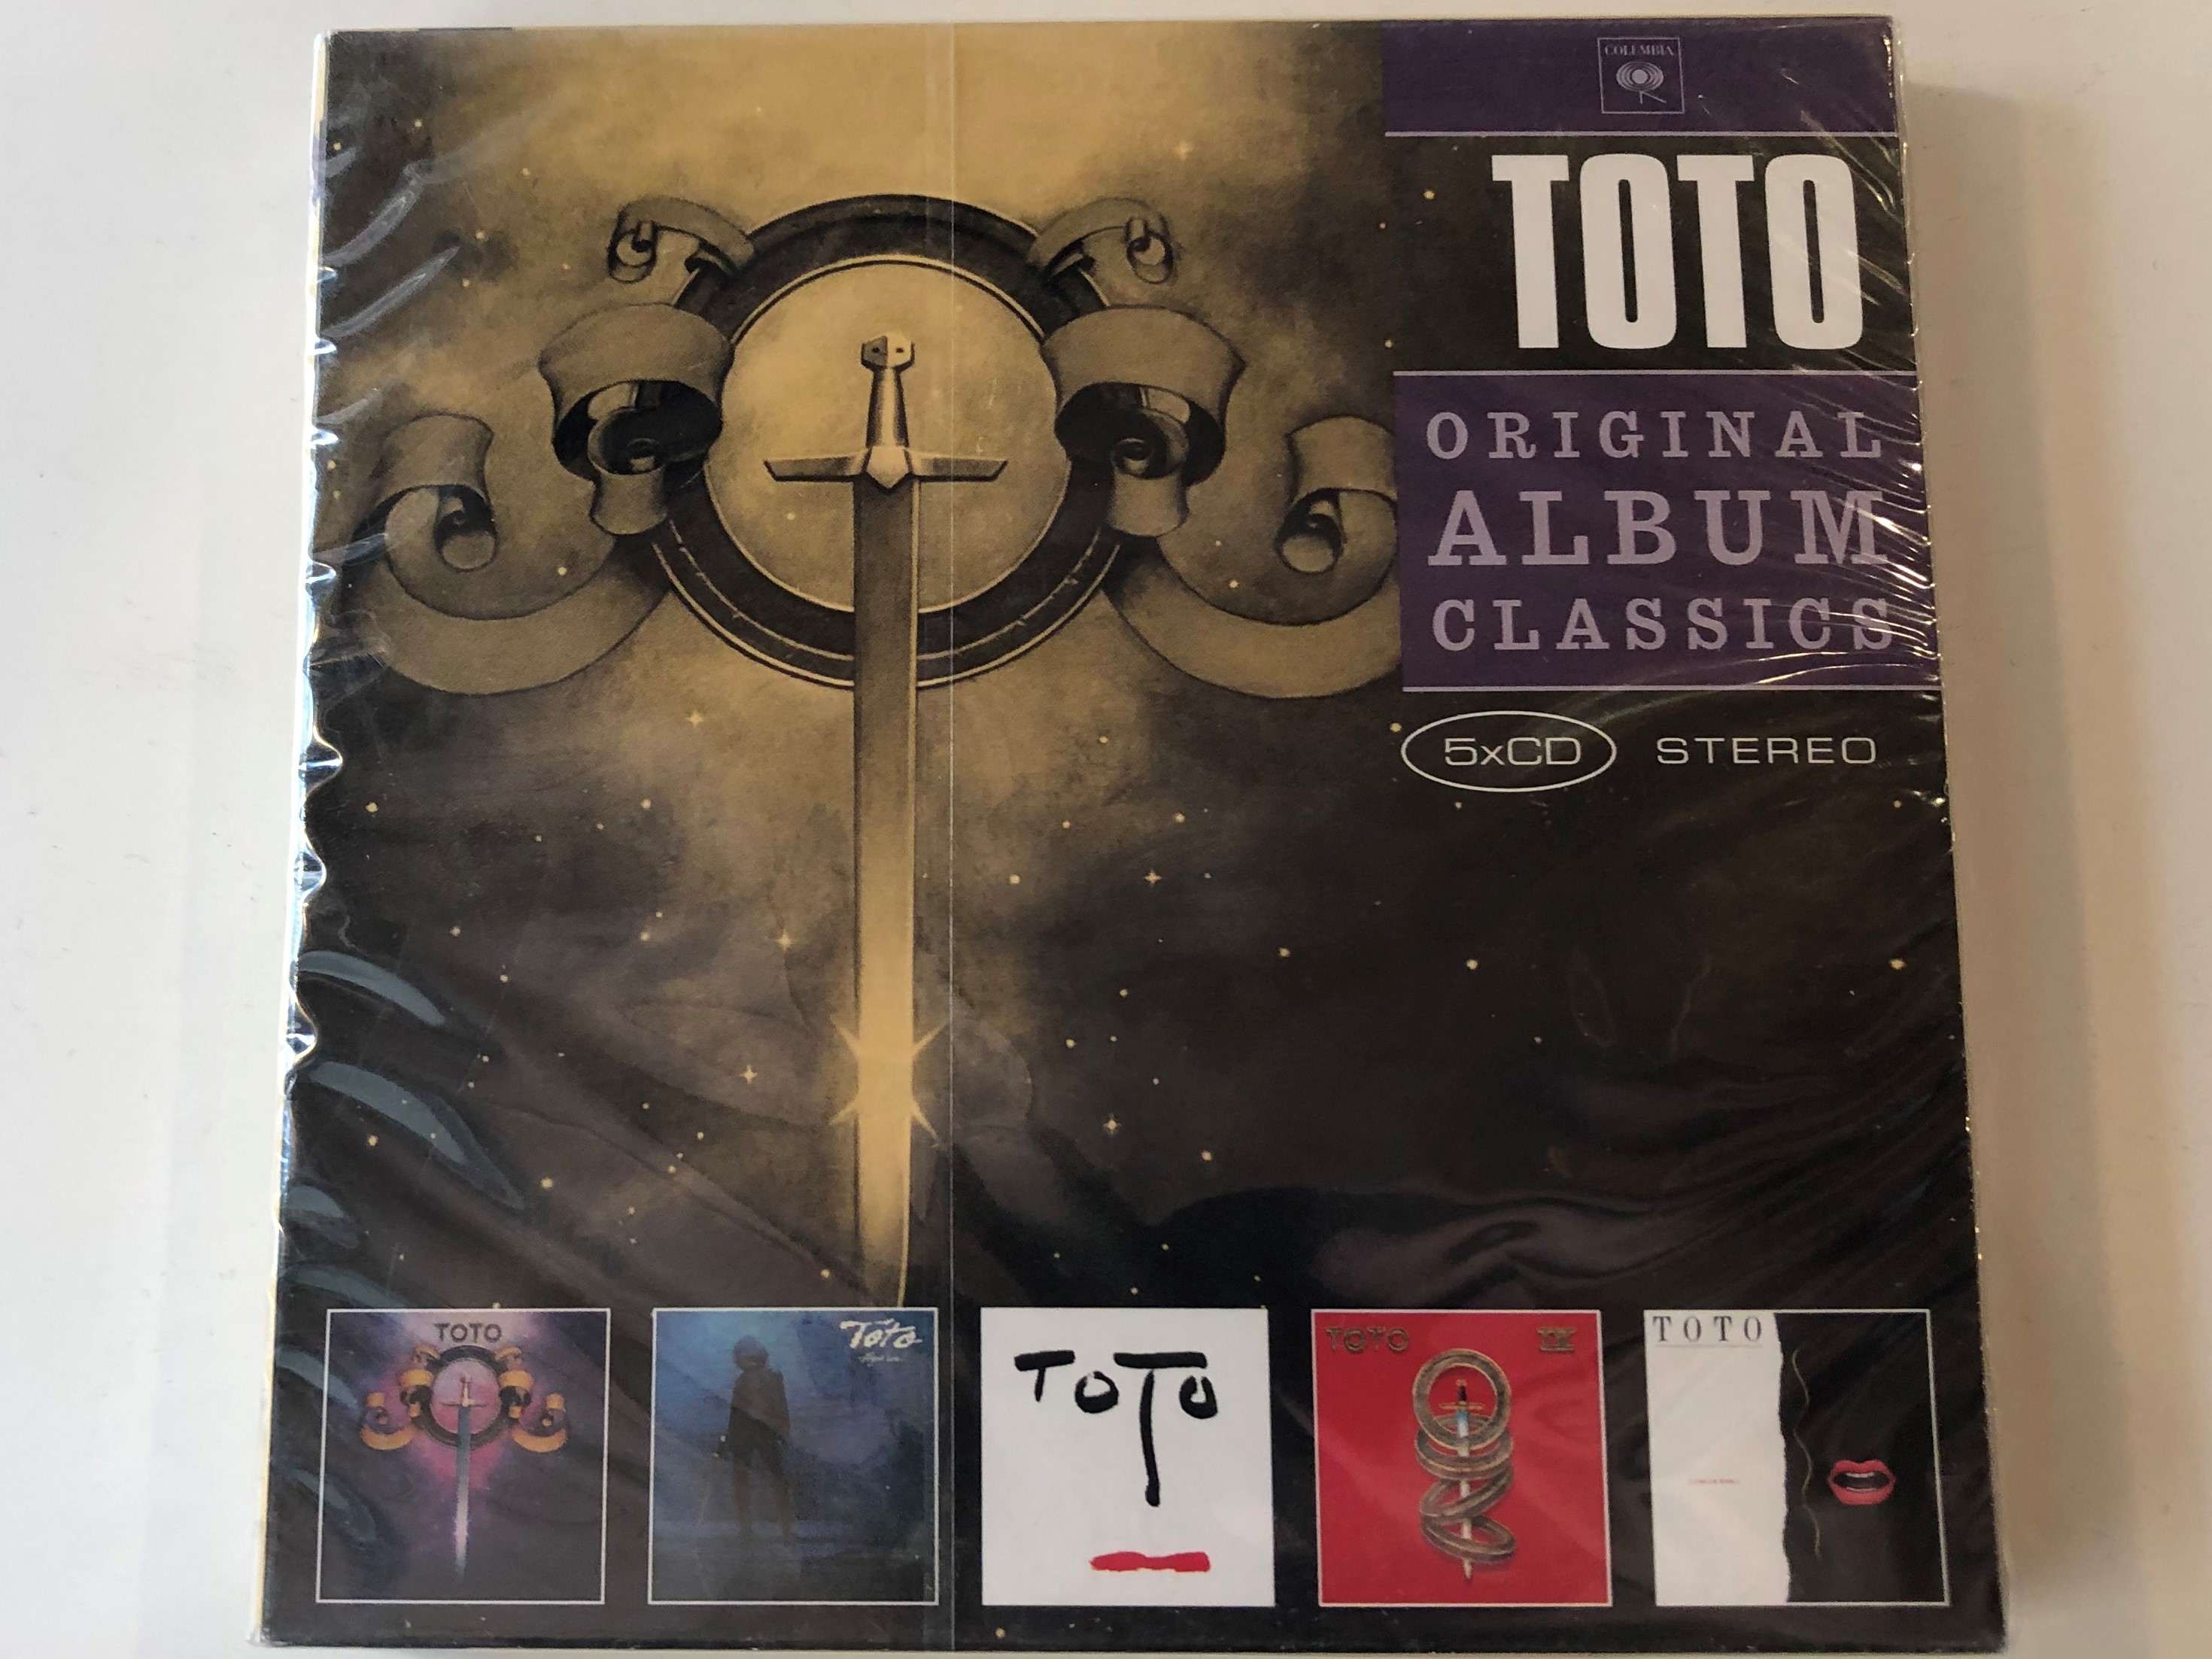 toto-original-album-classics-sony-music-5x-audio-cd-box-set-2011-stereo-88697935312-1-.jpg